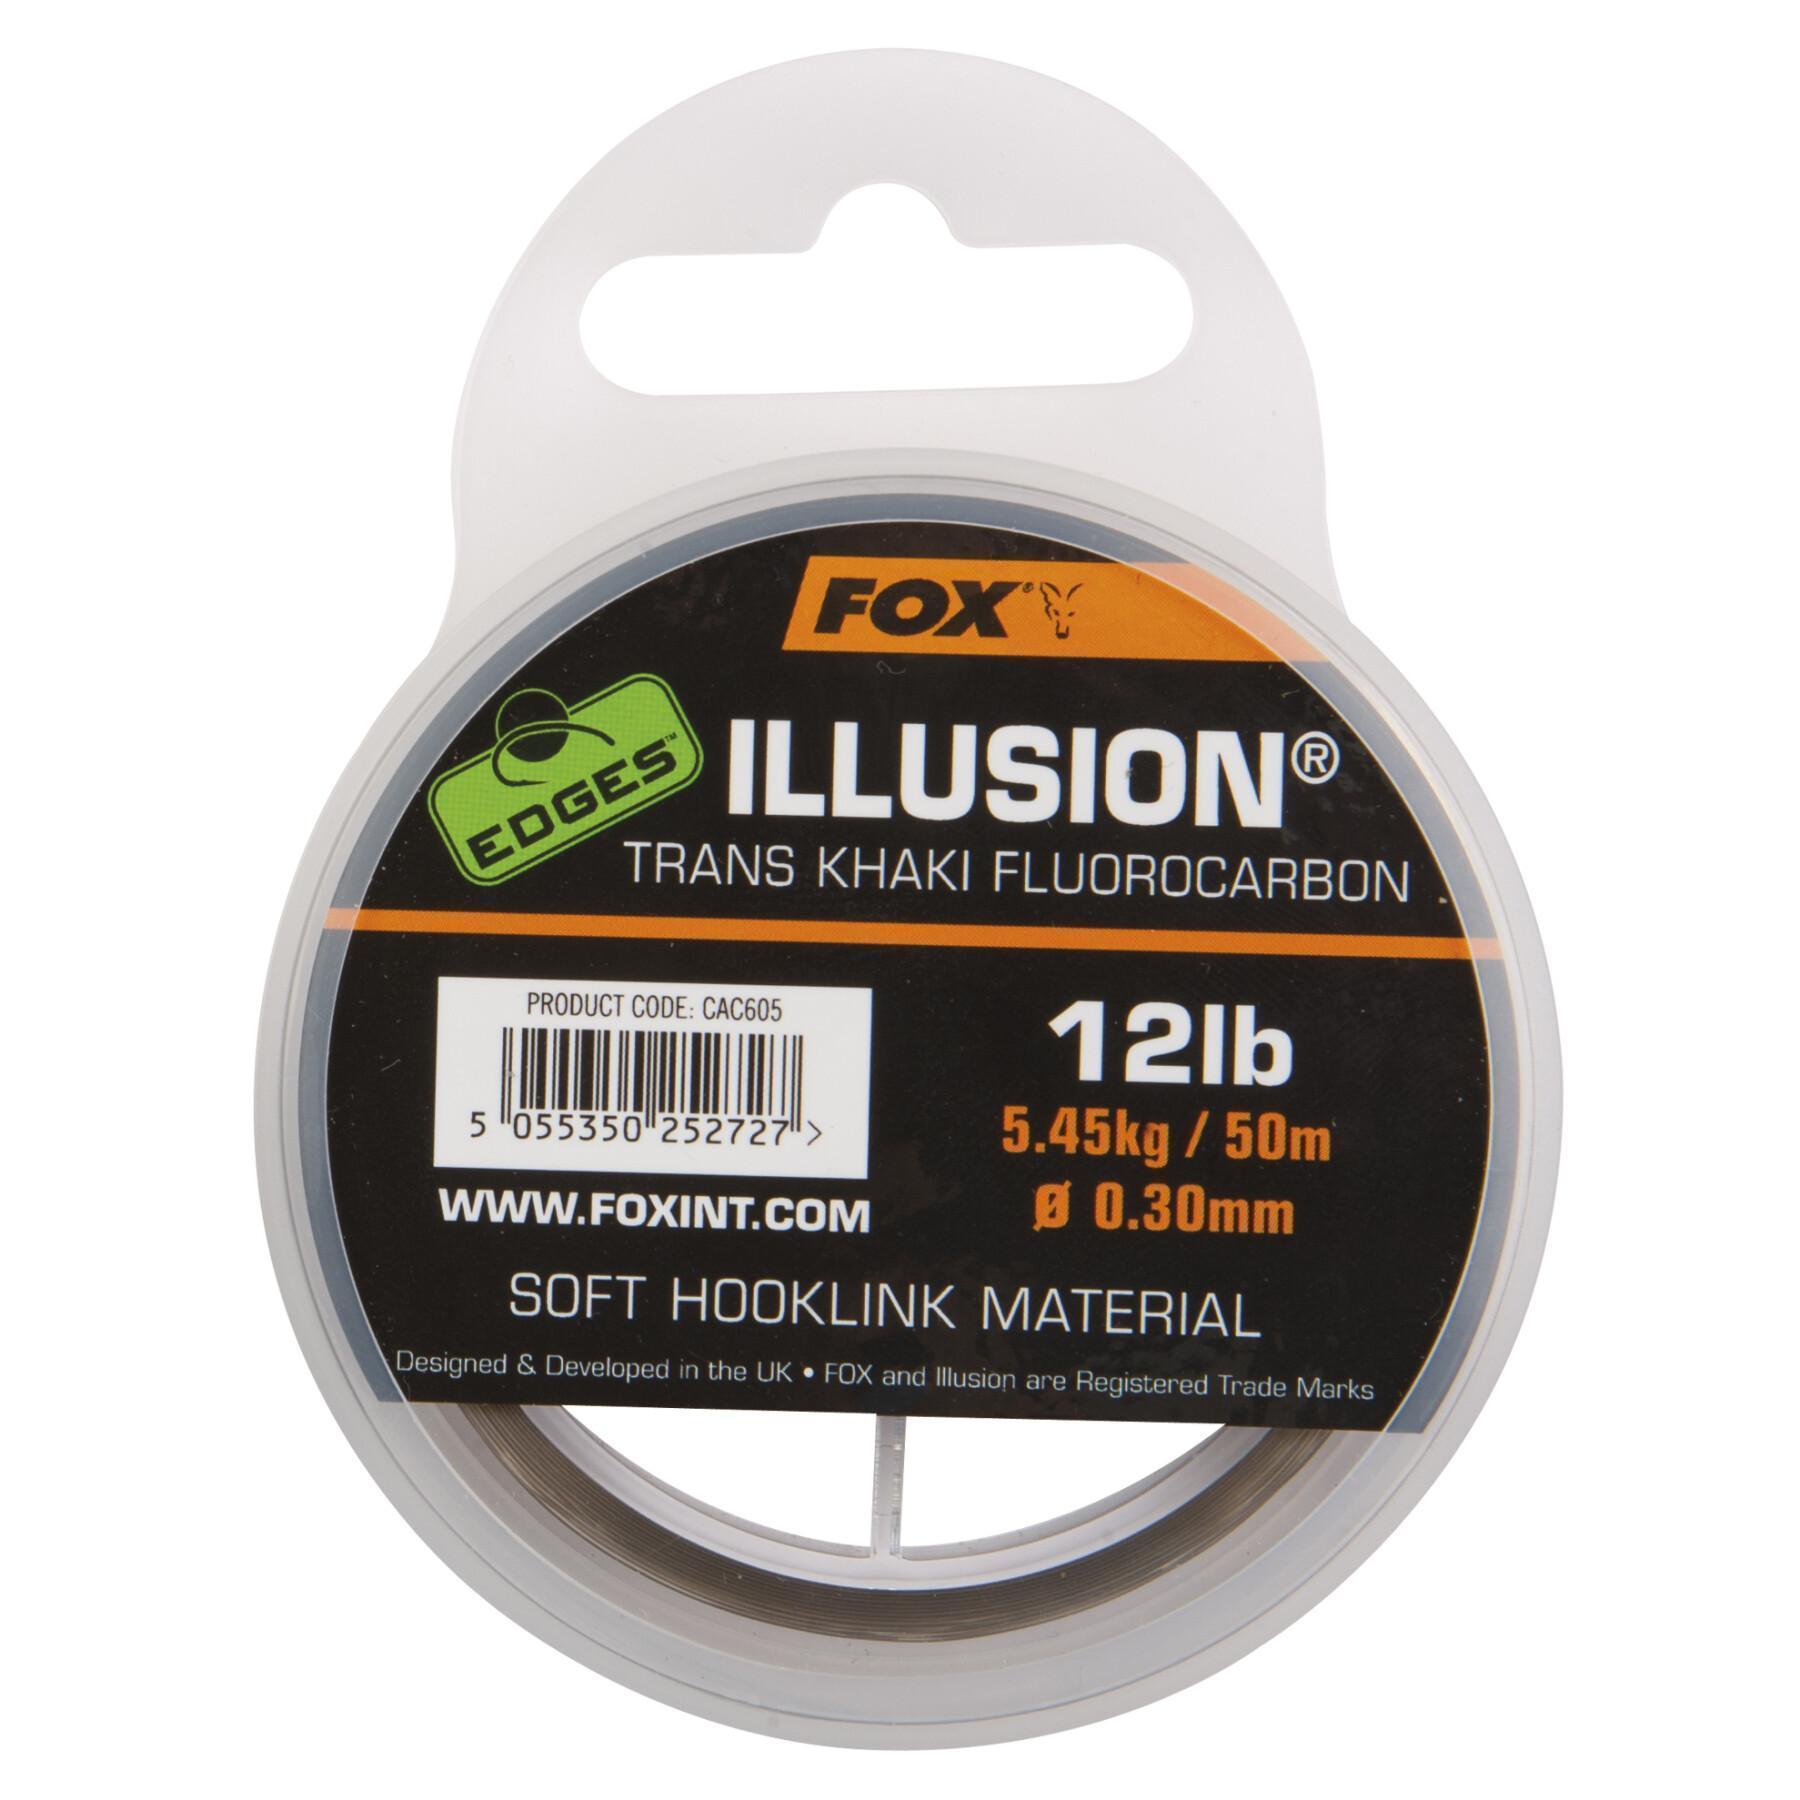 Soft illusion fluorocarbon wire Fox 12lb/0.30mm Edges